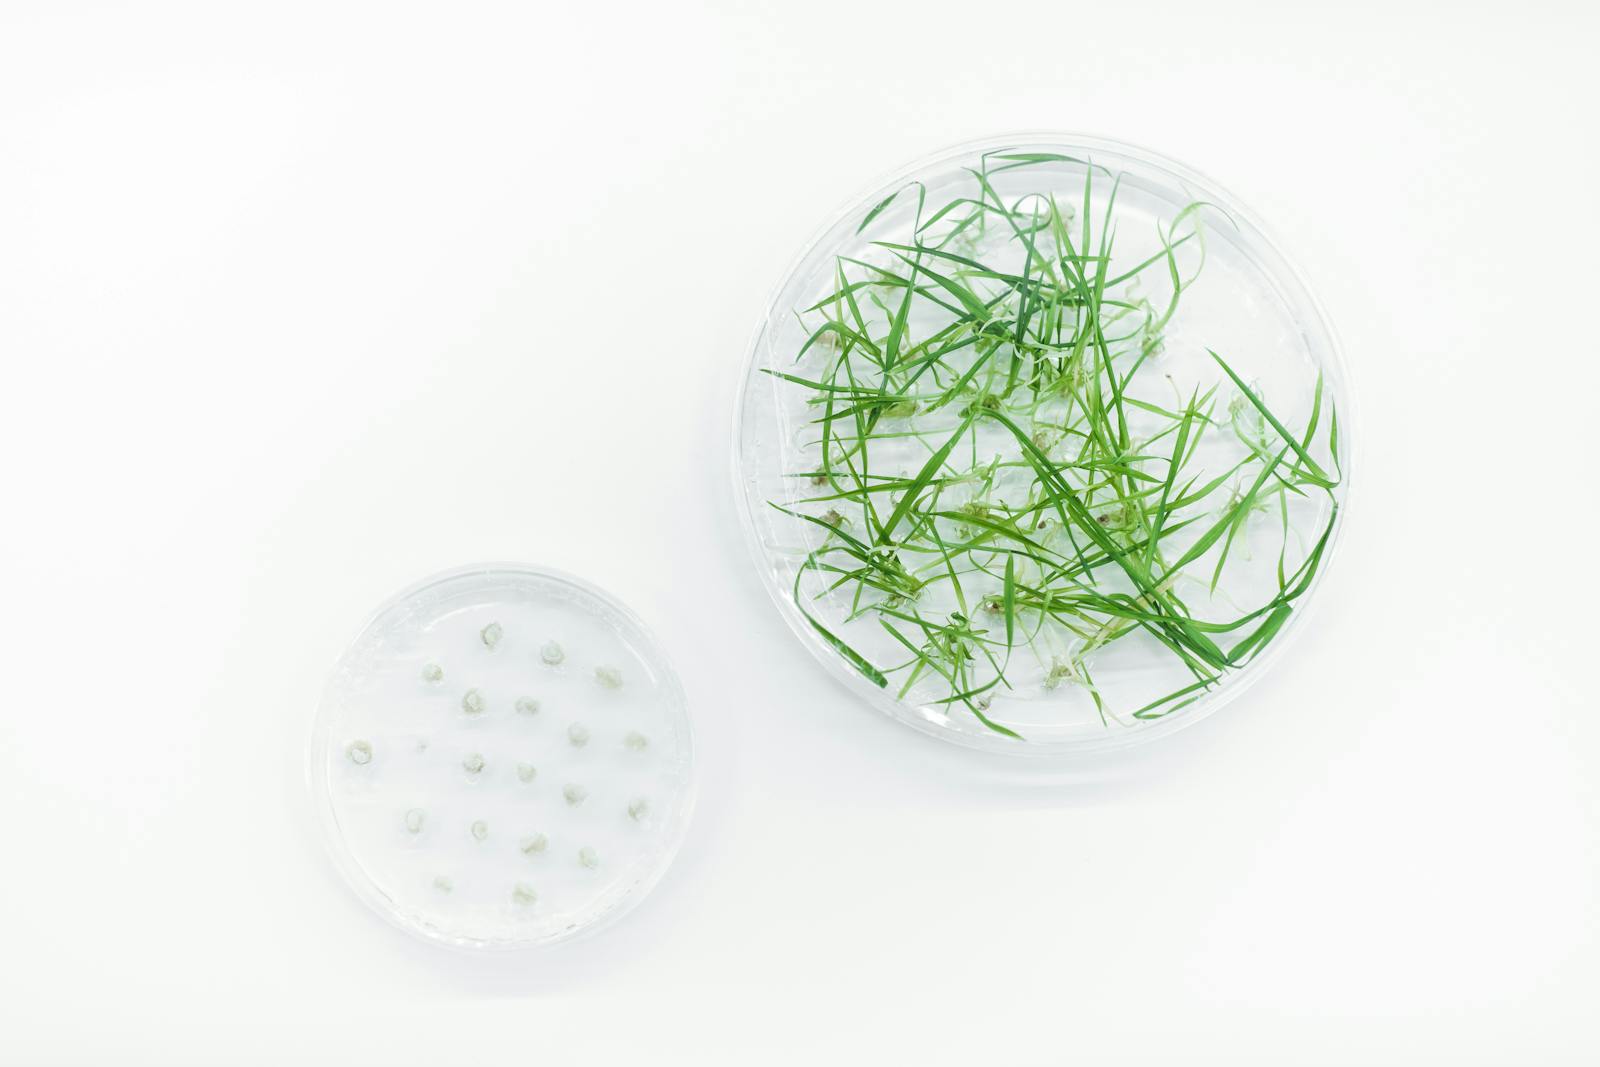 Scientist Using Plant-Based Ingredients to Formulate BIOEFFECT EGF Skincare.